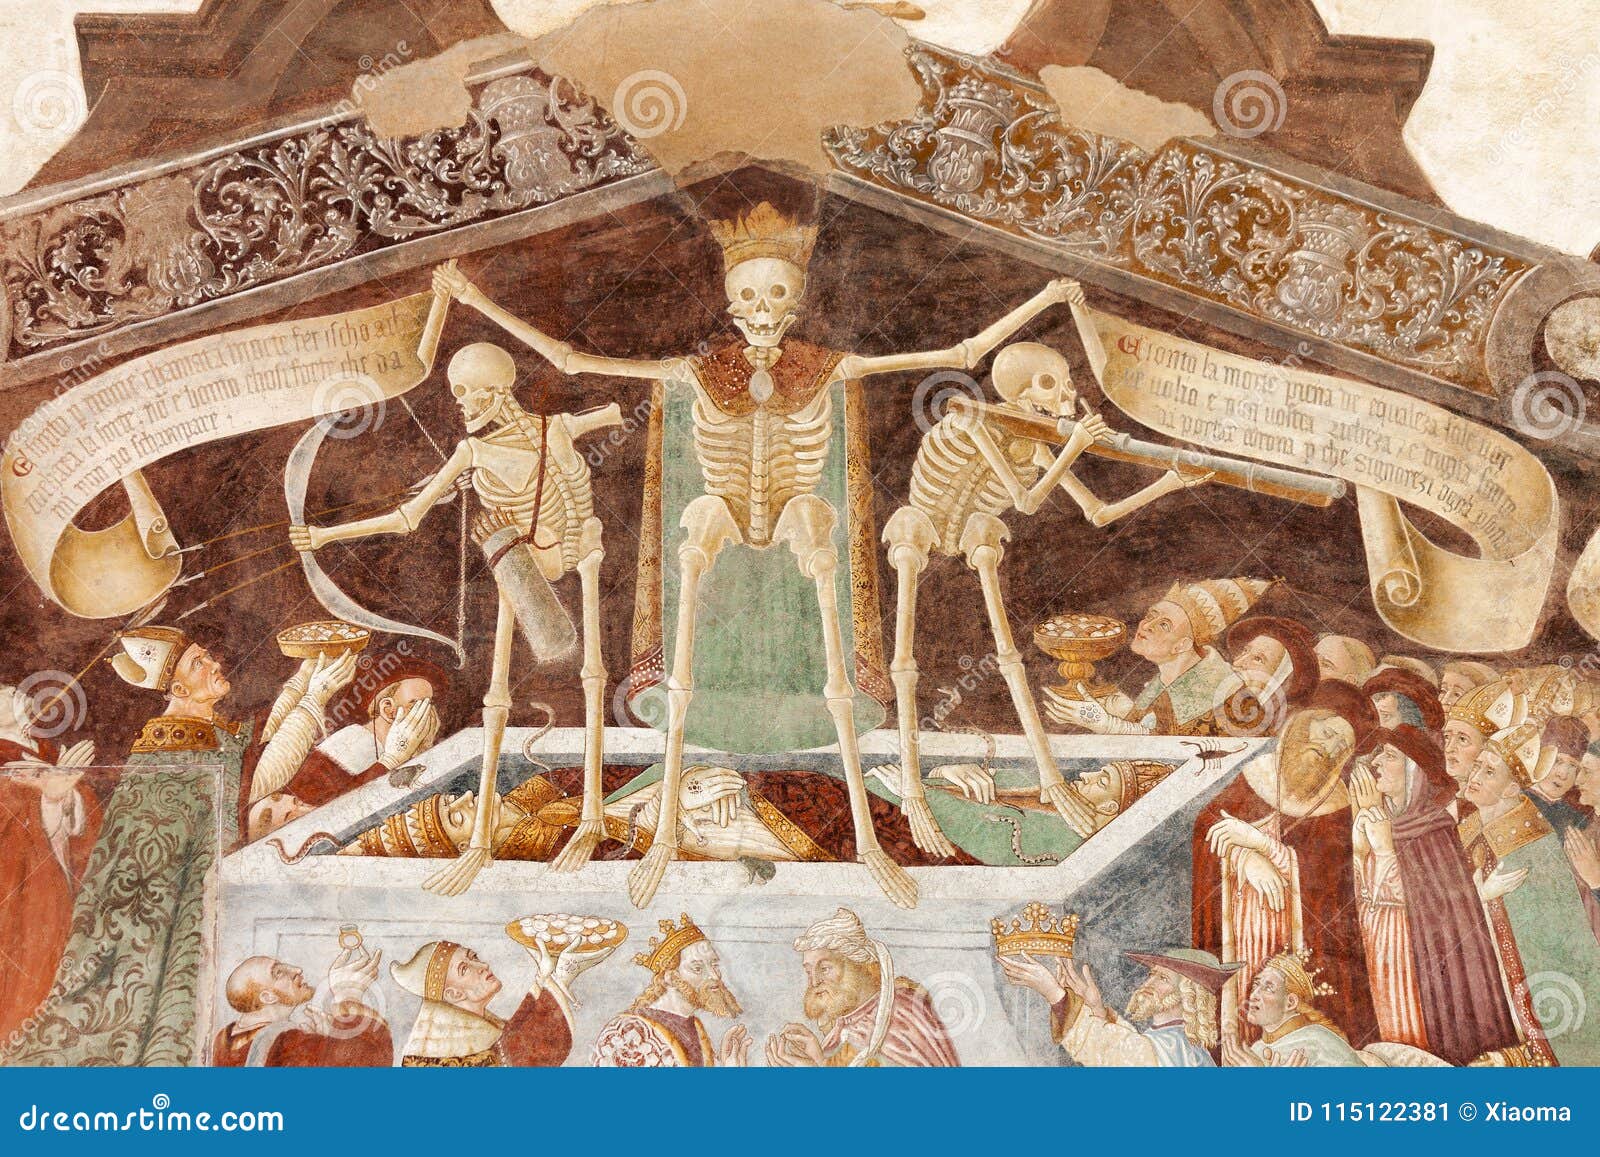 clusone, fresco, dance of the death